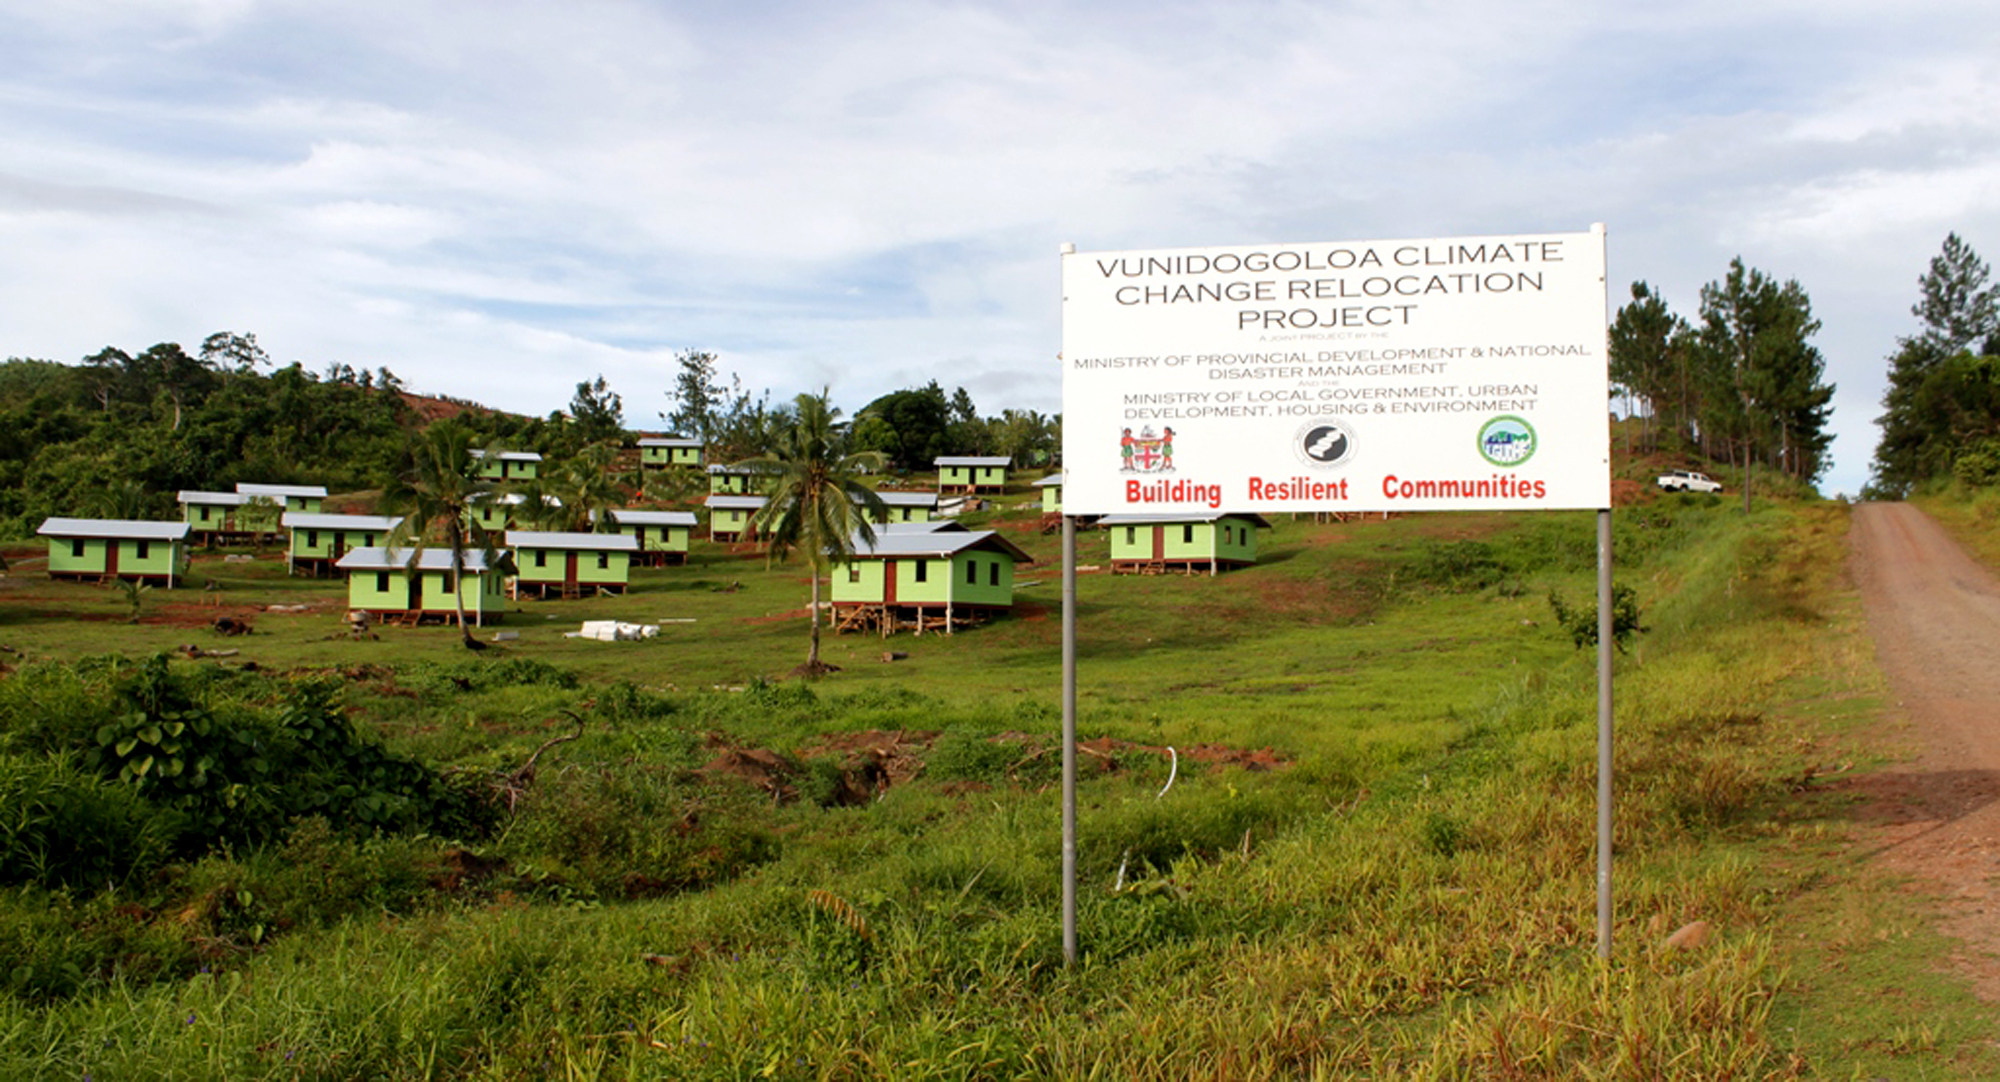 The relocated village Vunidogoloa in Fiji, January 2014. (AP/Eroni Valili)